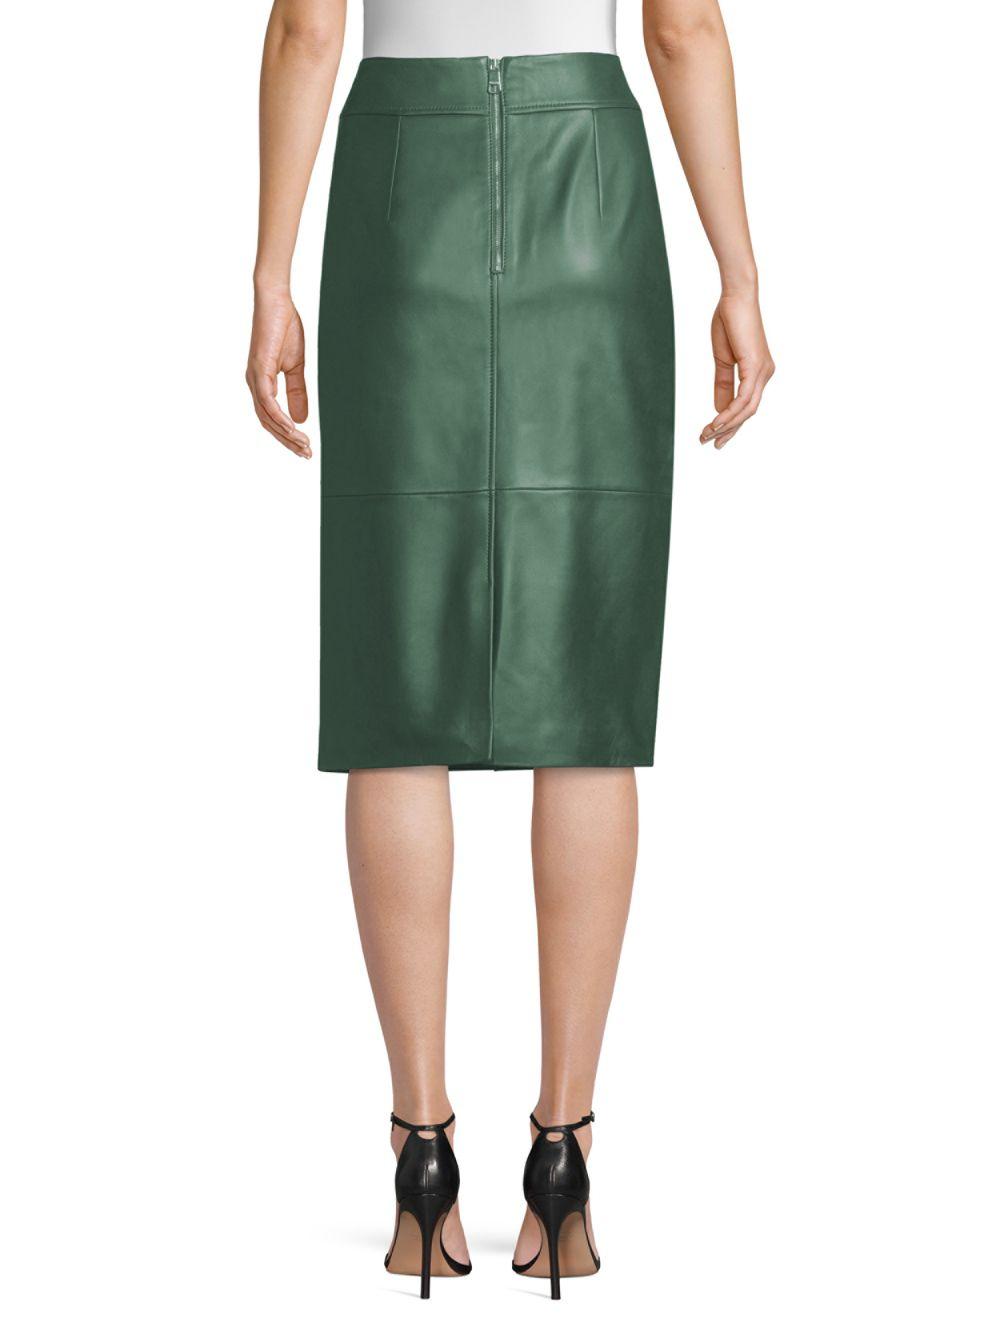 hugo boss green leather pencil skirt